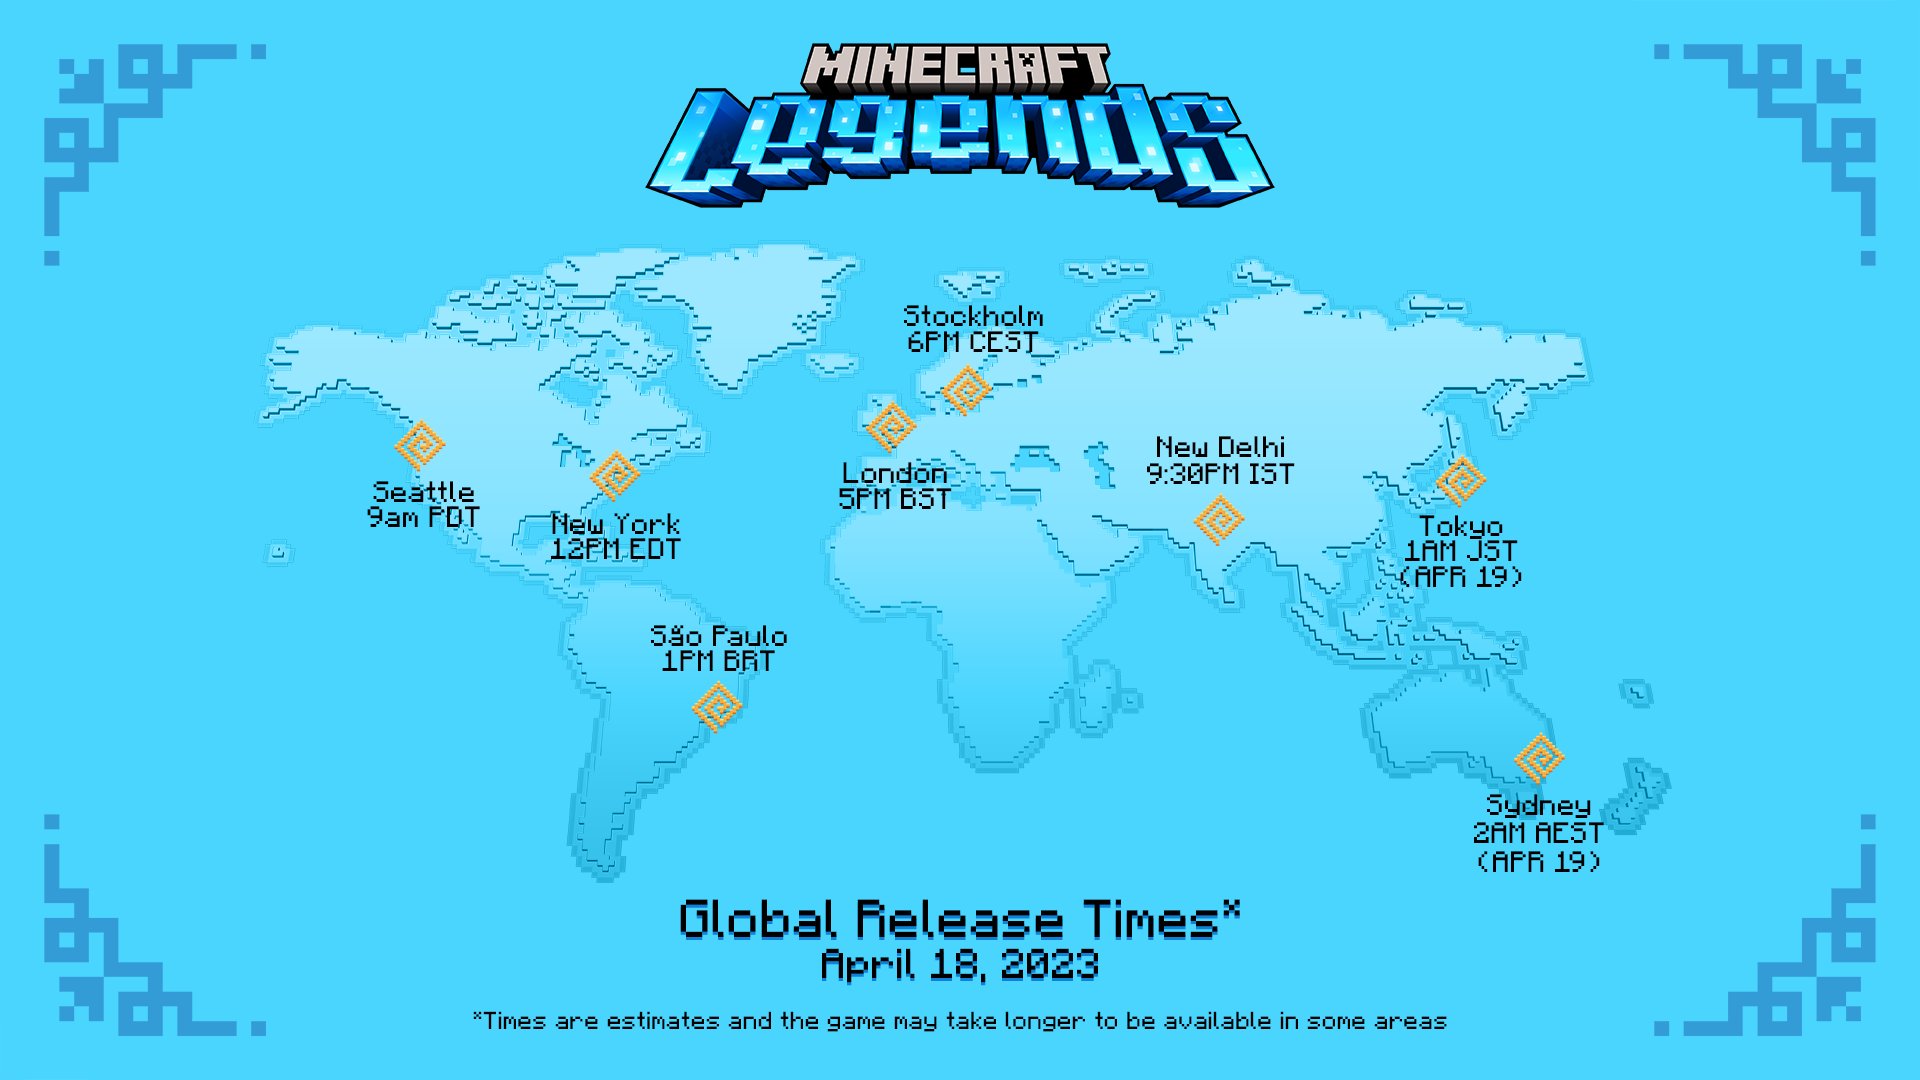 Minecraft Legends sure to save the date! #MinecraftLegends is right around the corner